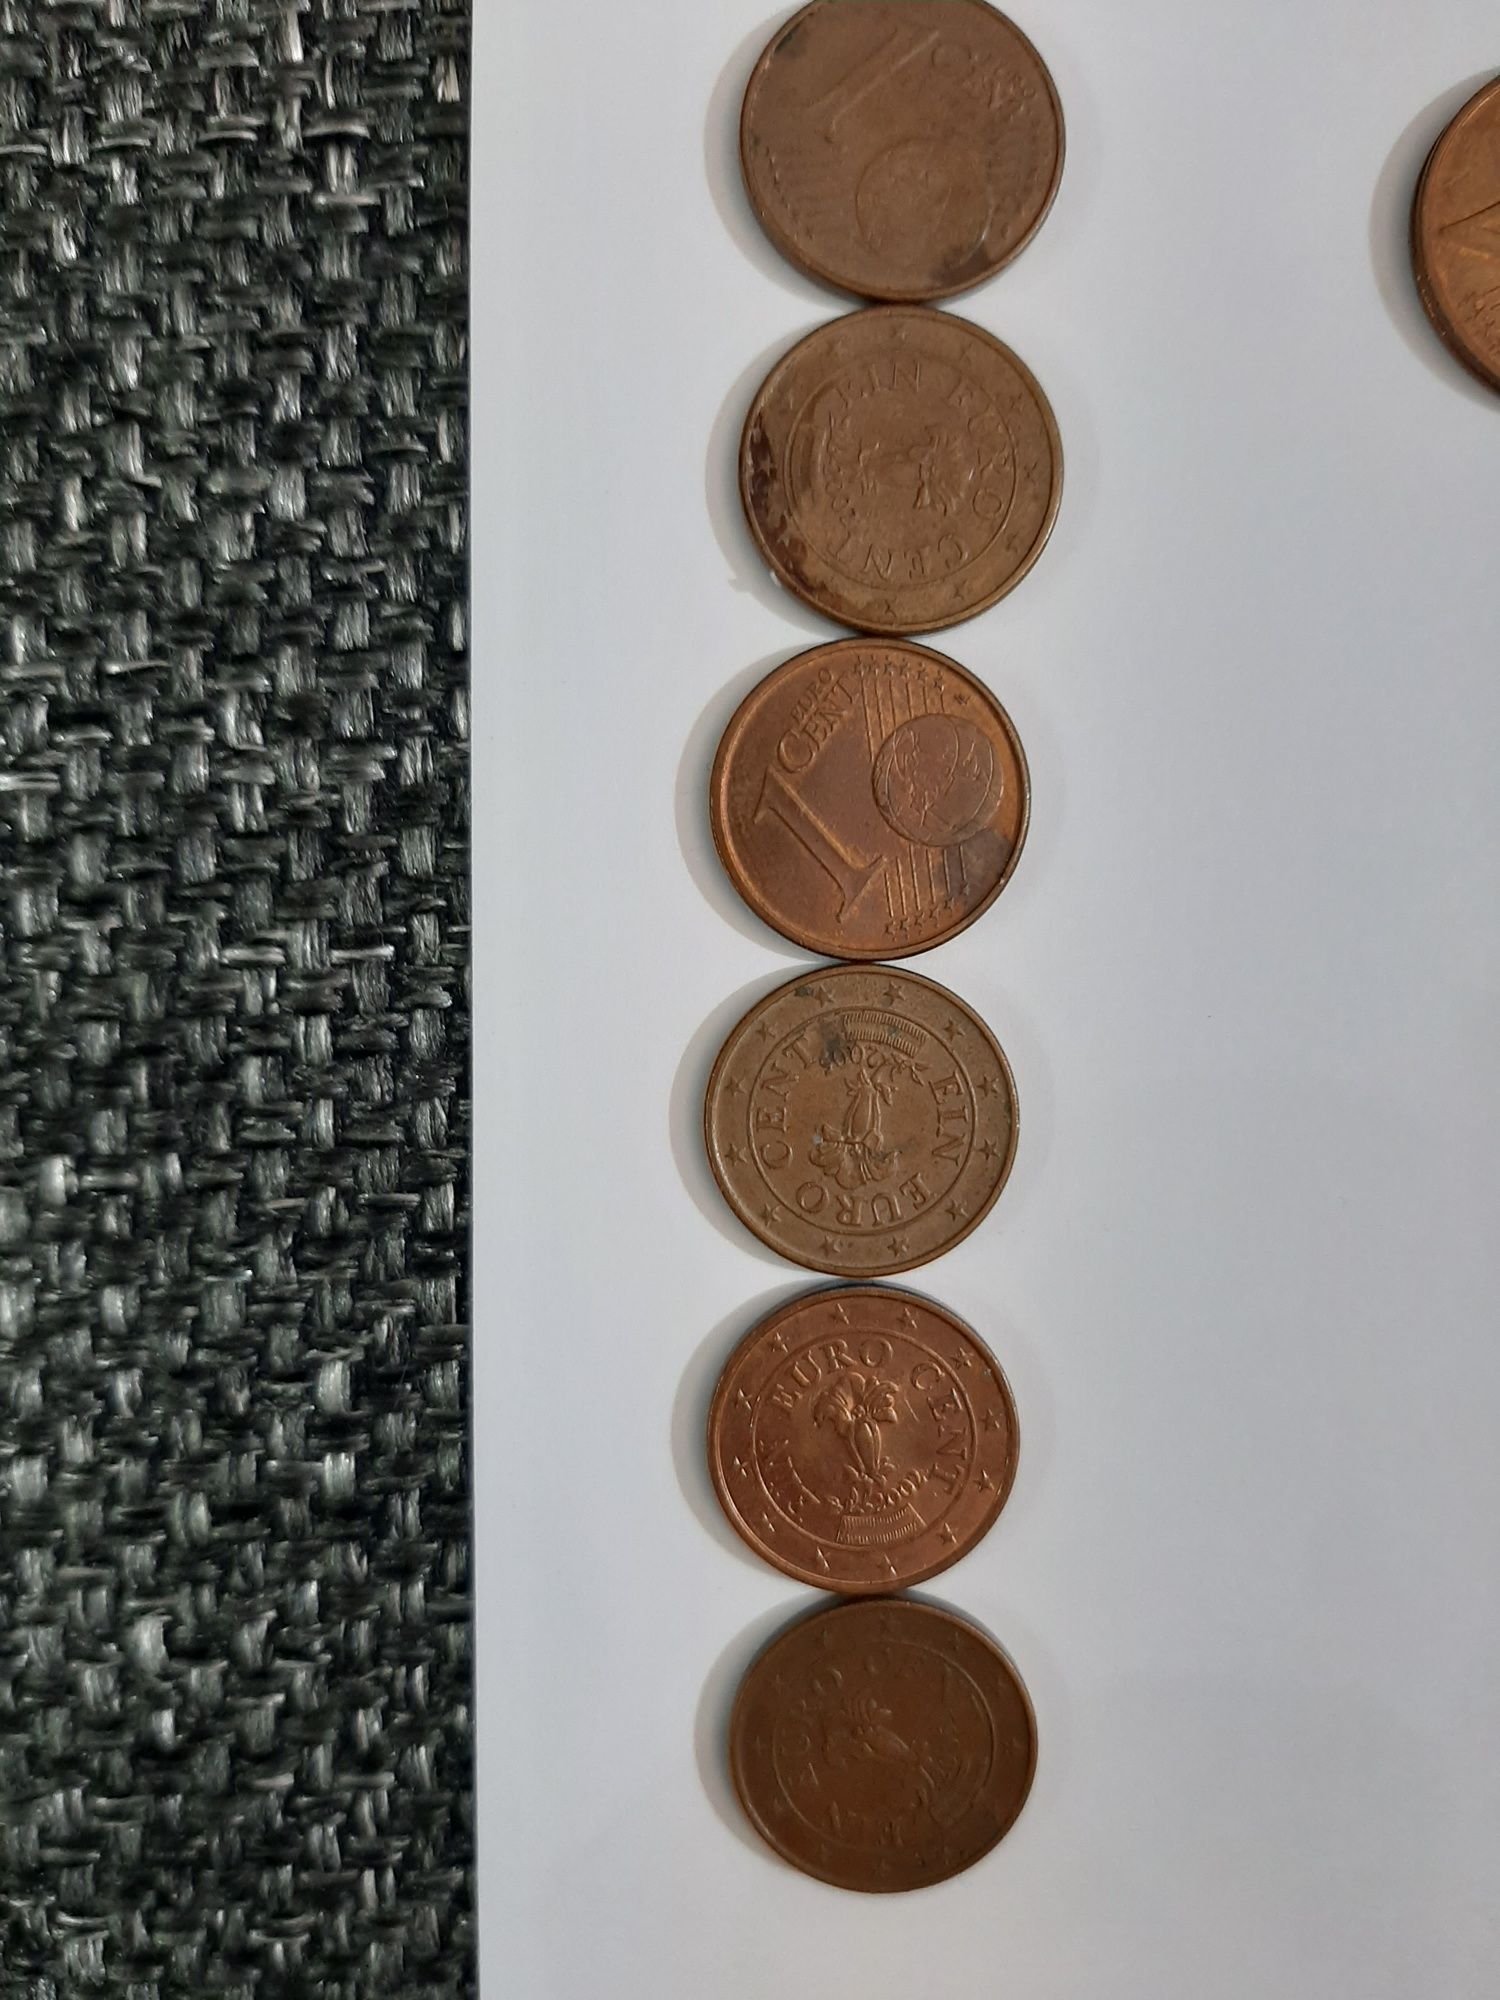 Monede  de colectie  euro cent . Monede vechi .Bancnote 100 lei